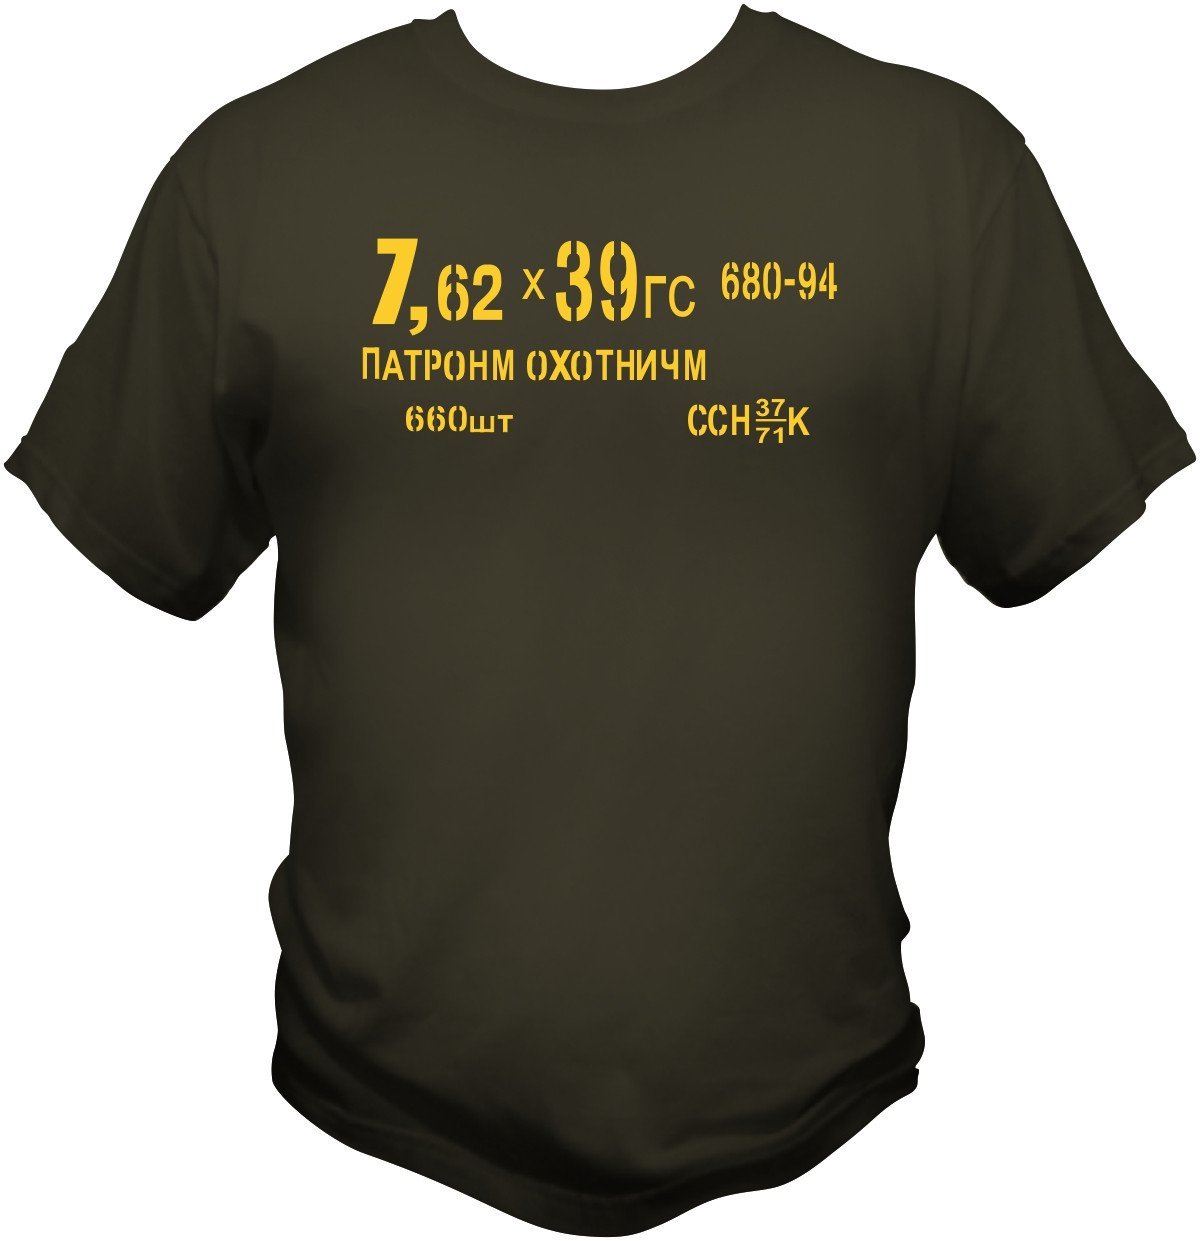 7.62 x 39 AK47 Ammo Can Shirt